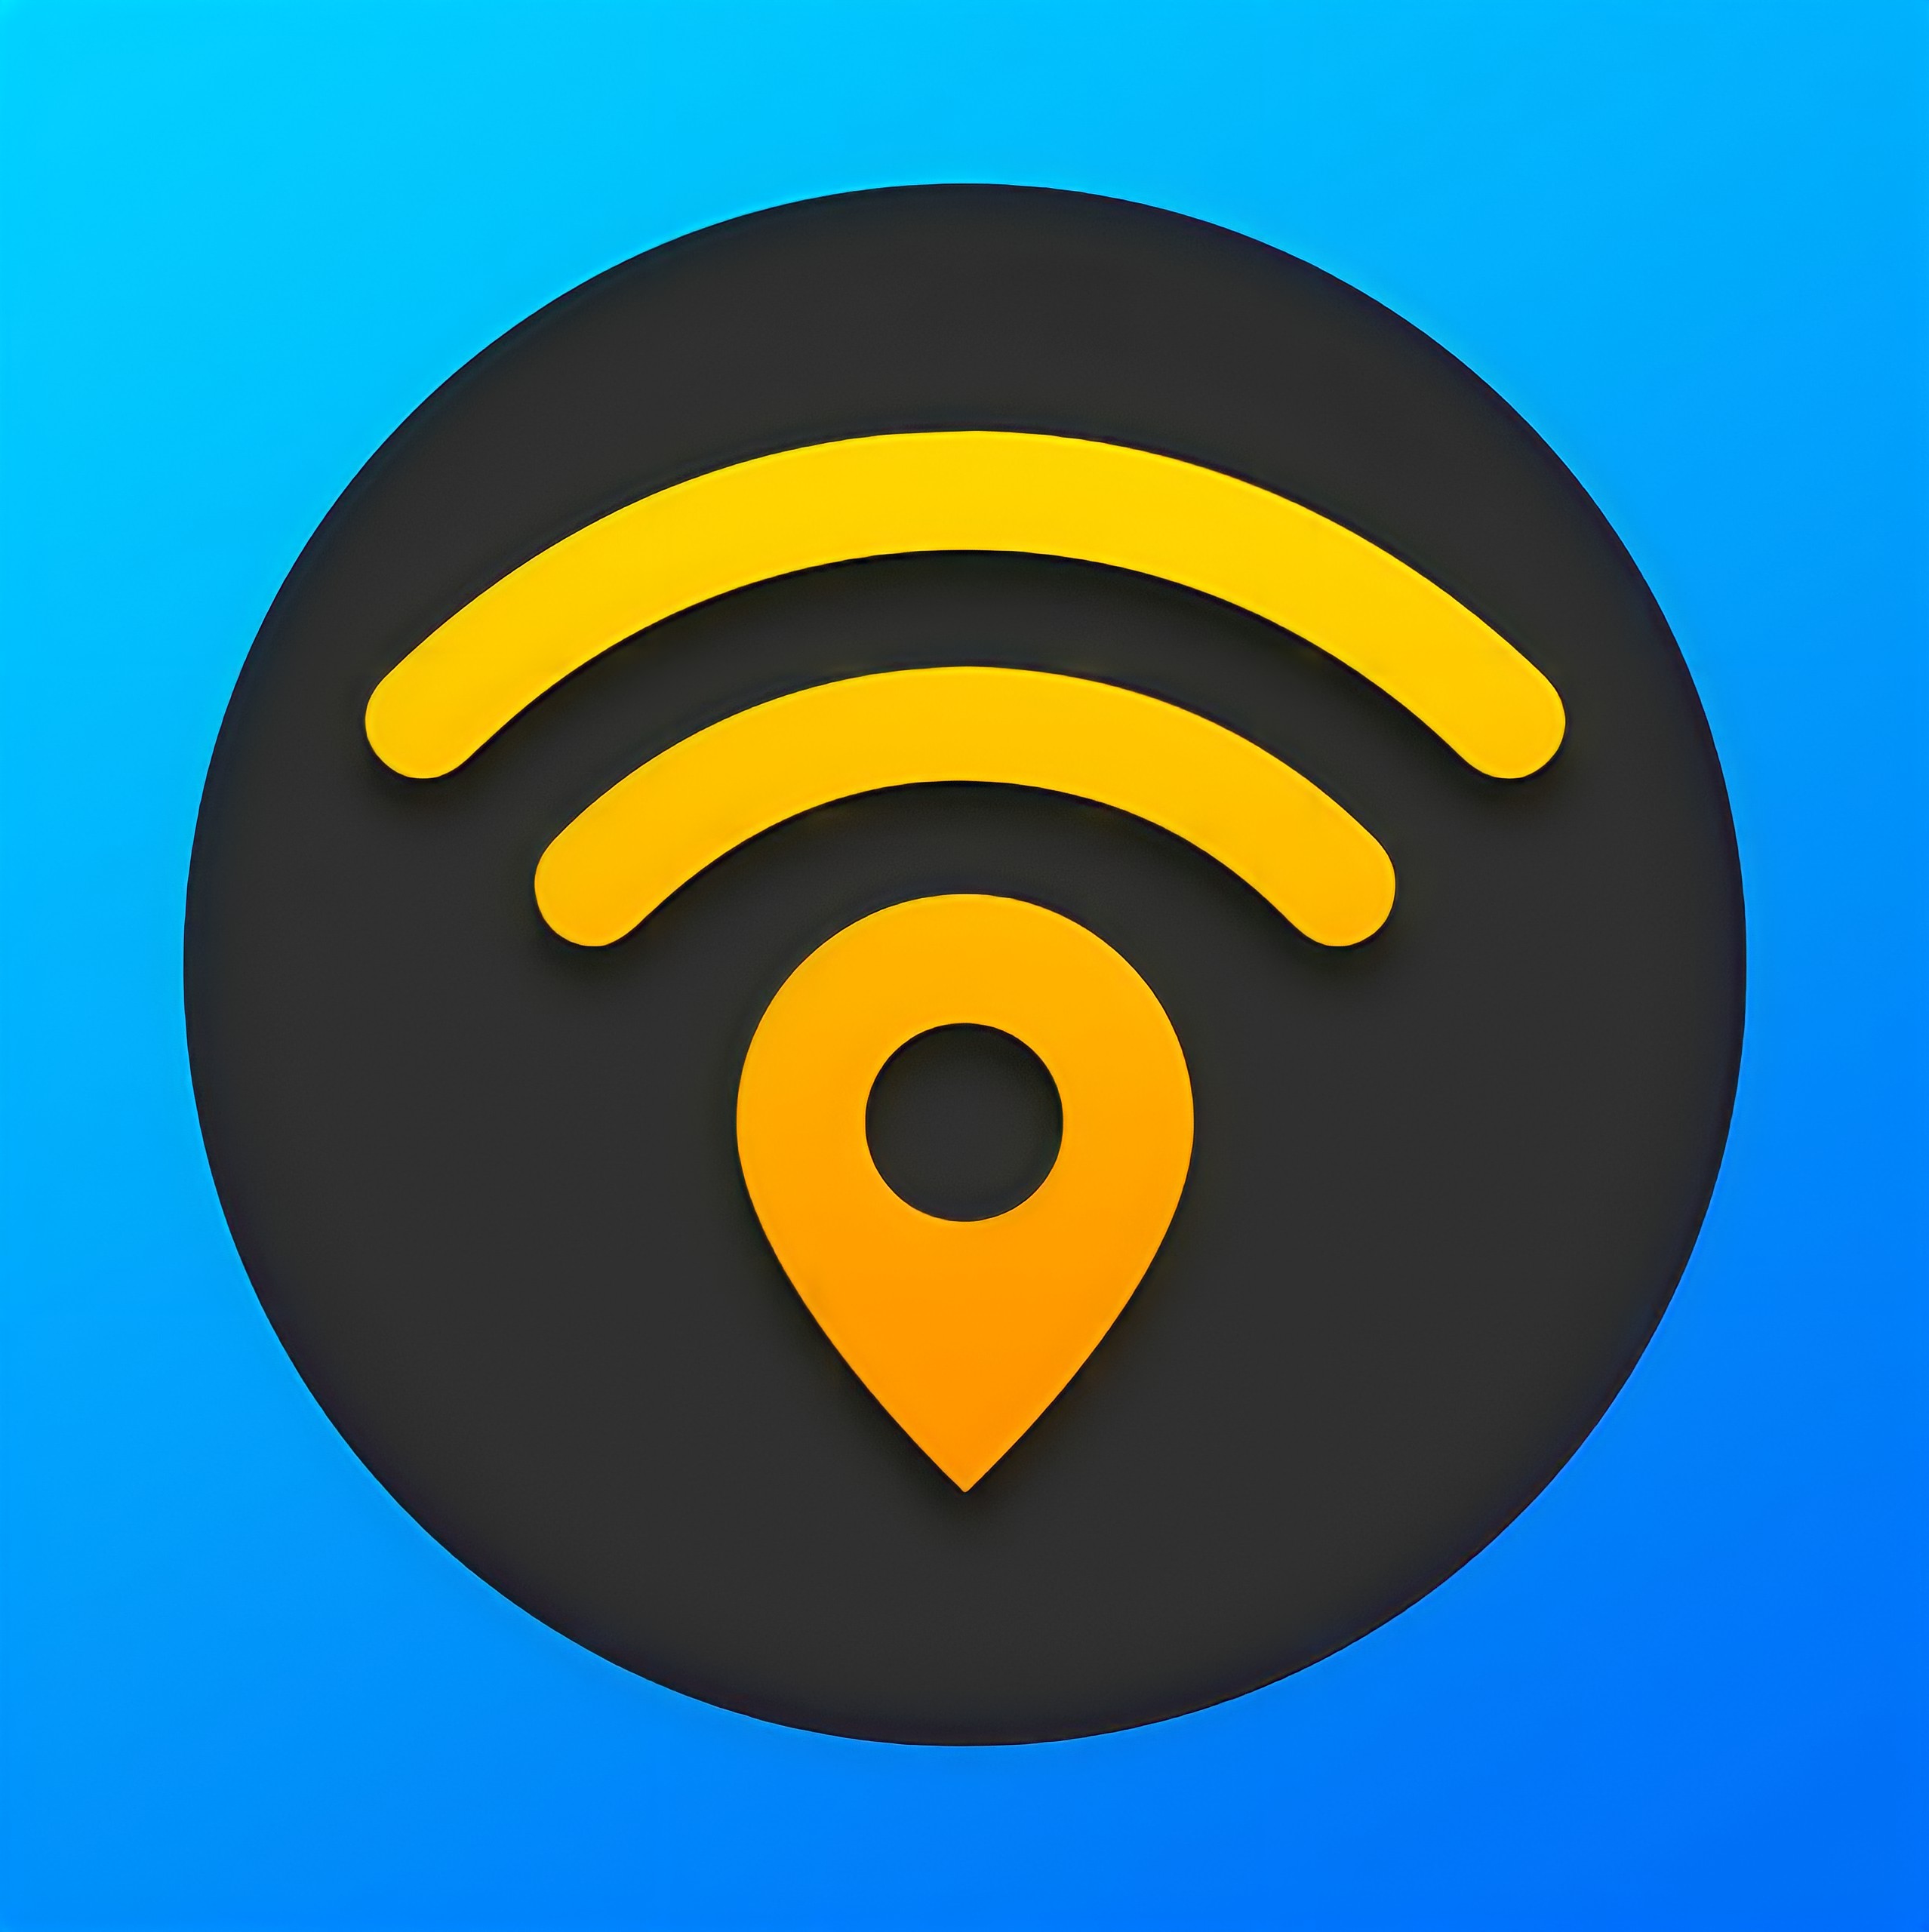 Fora pro wi fi. Wi-Fi Map Pro. WIFI карта. WIFI приложение. Вай фай МЭП.